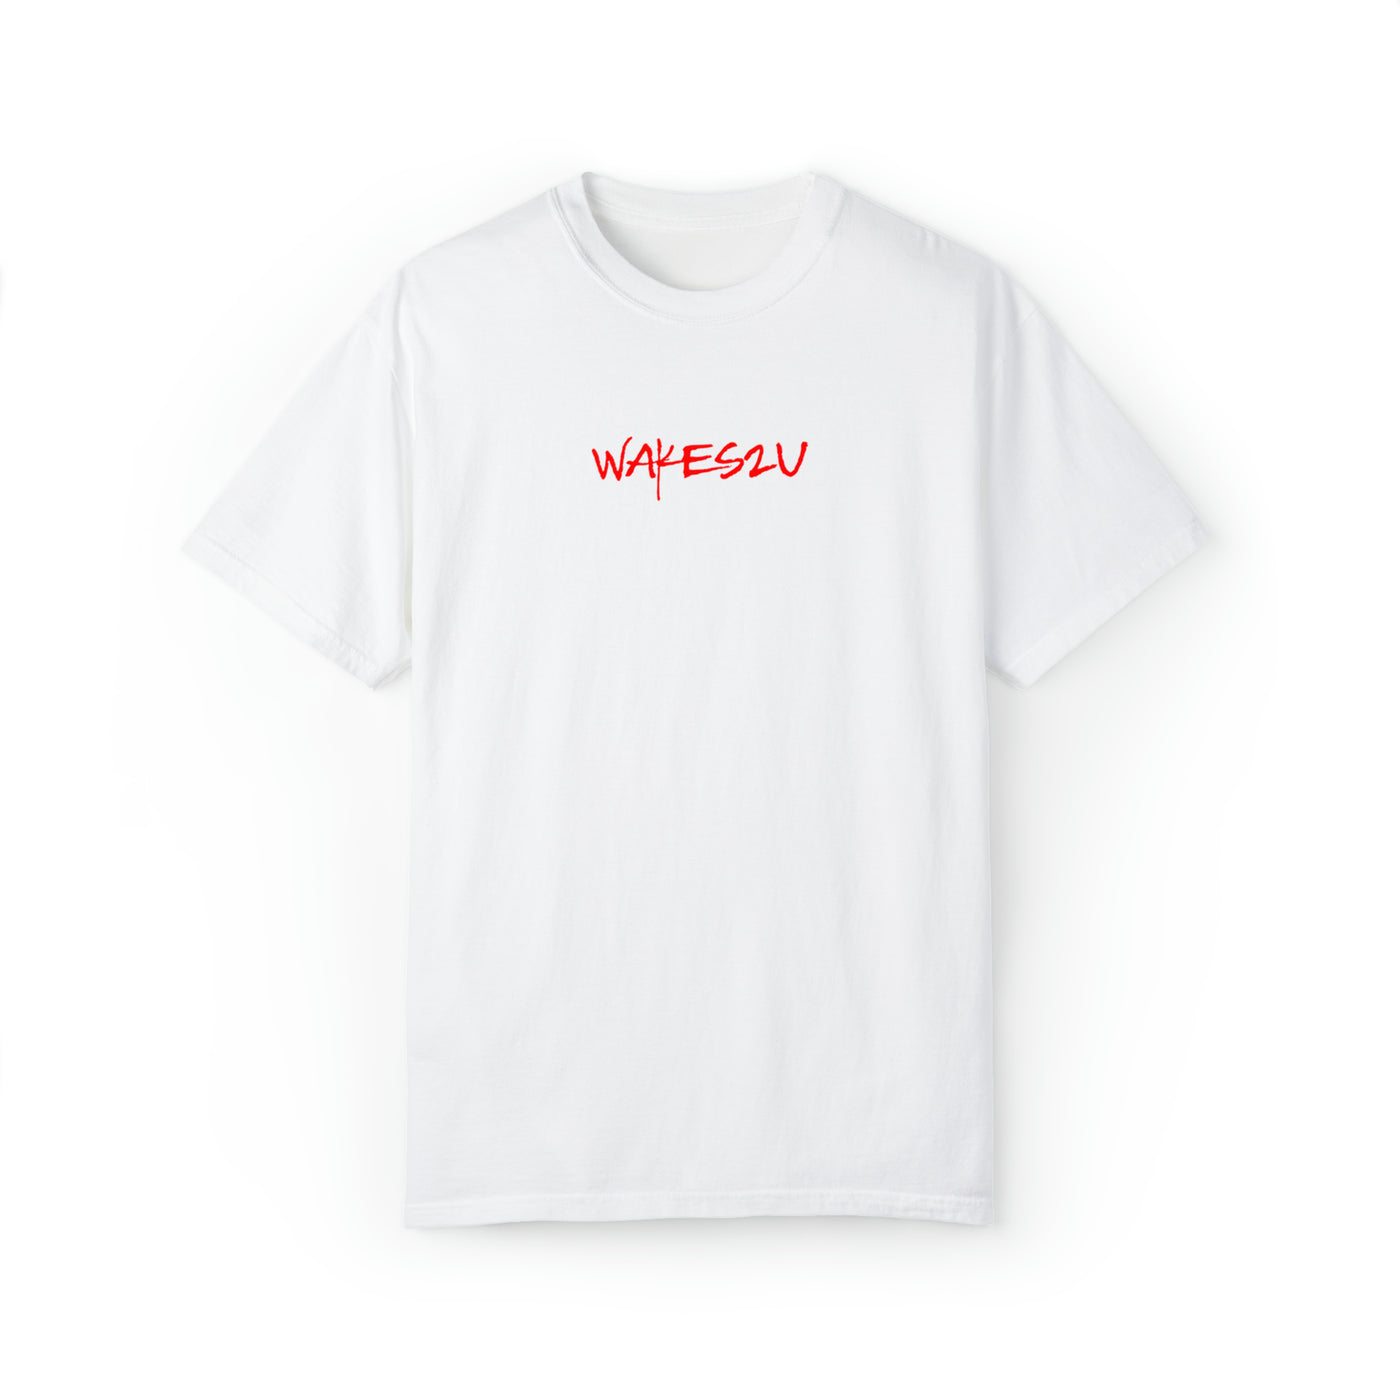 WAKES2U "EXPENSIVE HABIT"  T-shirt